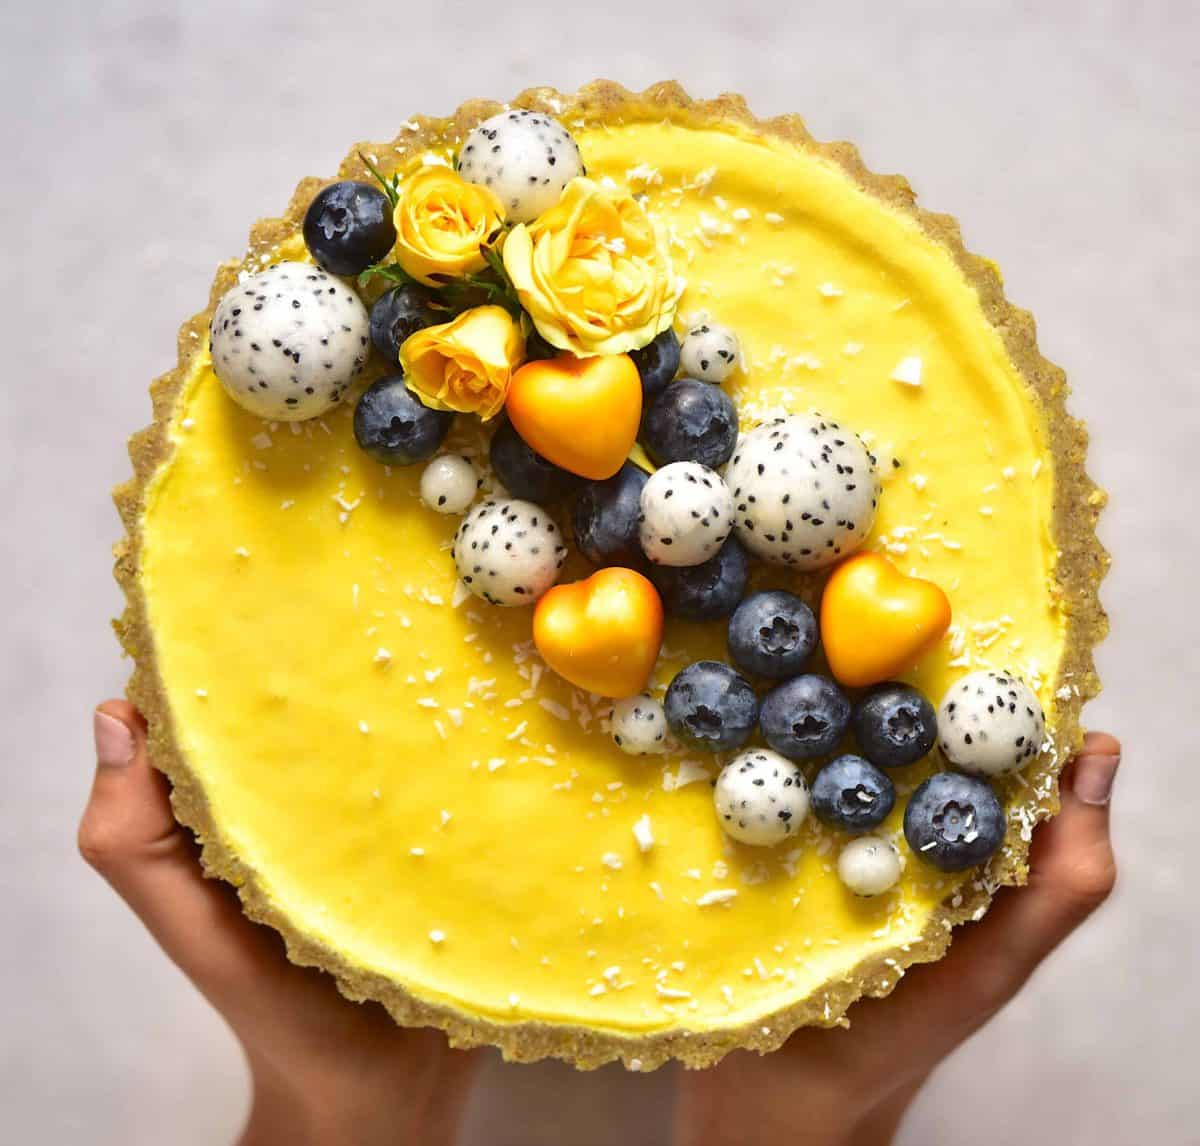 vegan pistachio & lemon tart topped with dragon fruit, roses and blueberries